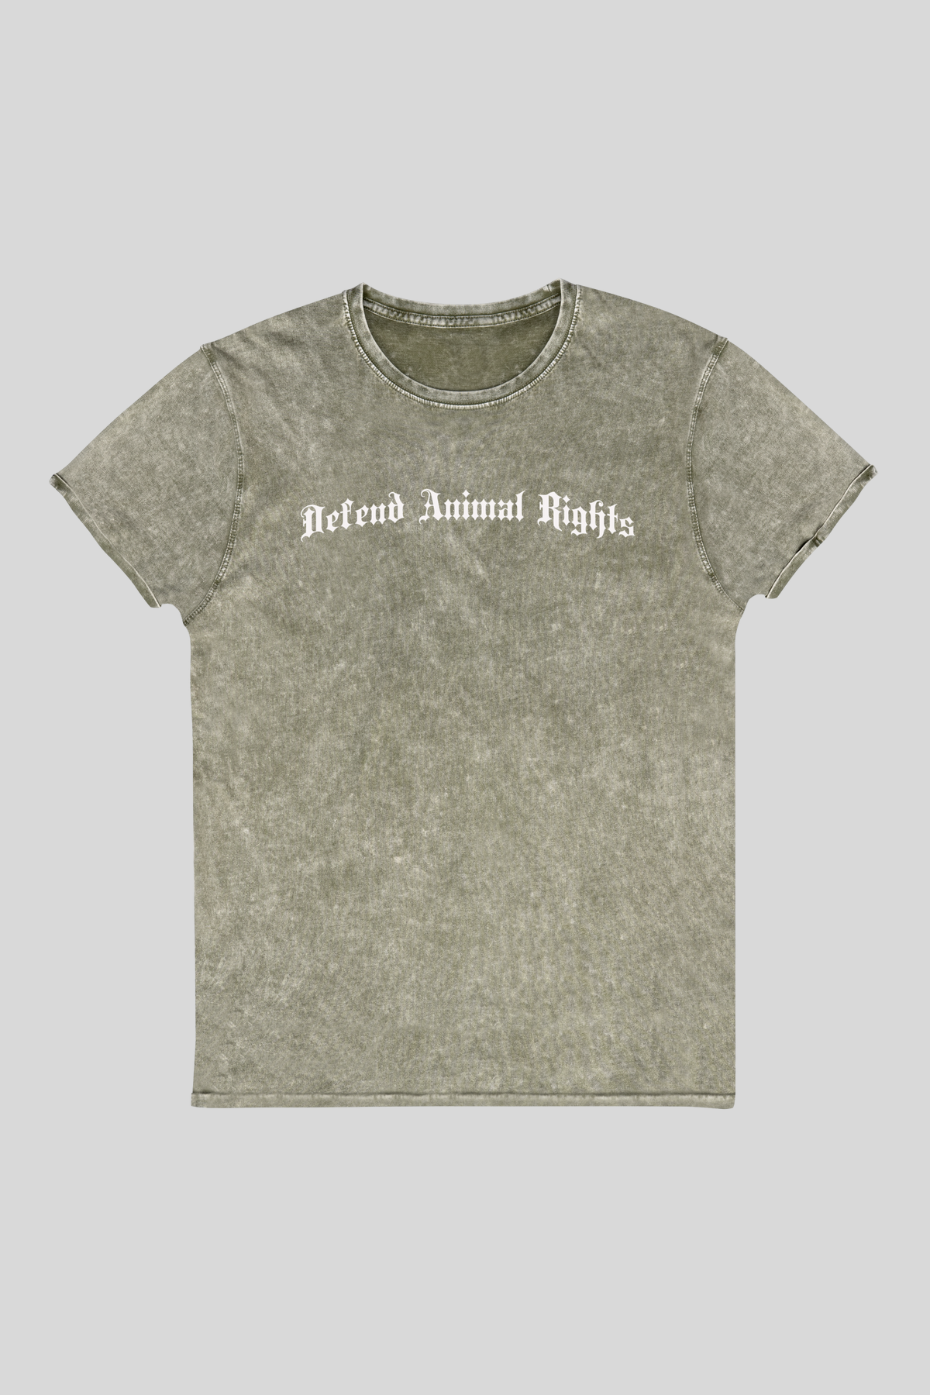 Defend Animal Rights Unisex Denim T-Shirt